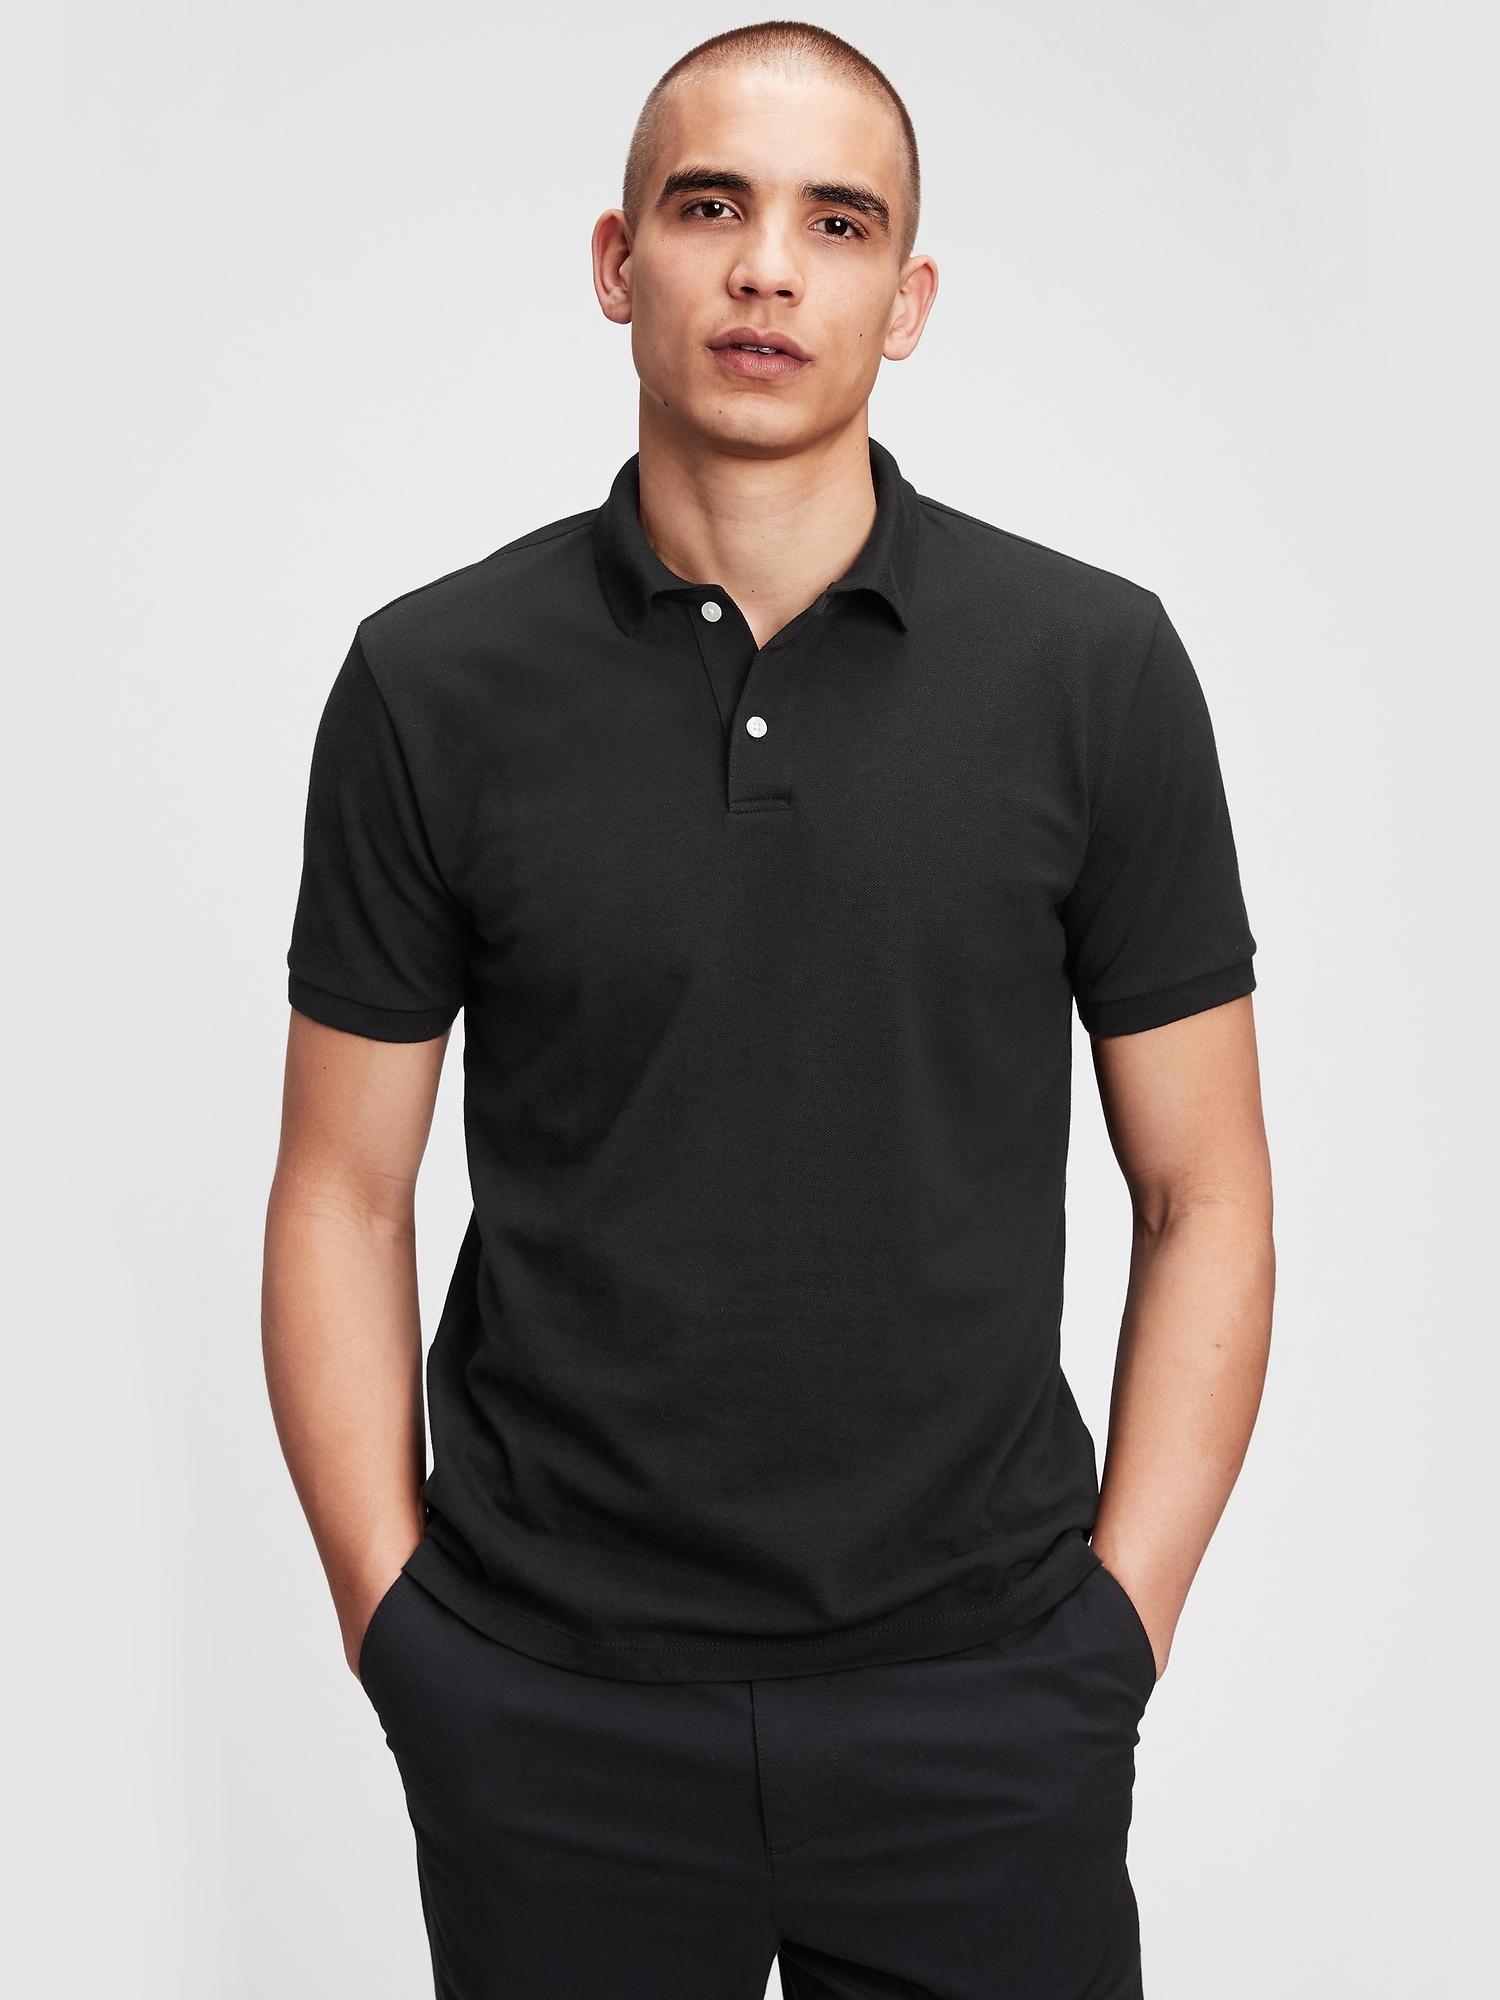 Gap All Day Pique Polo Shirt Shirt In Black